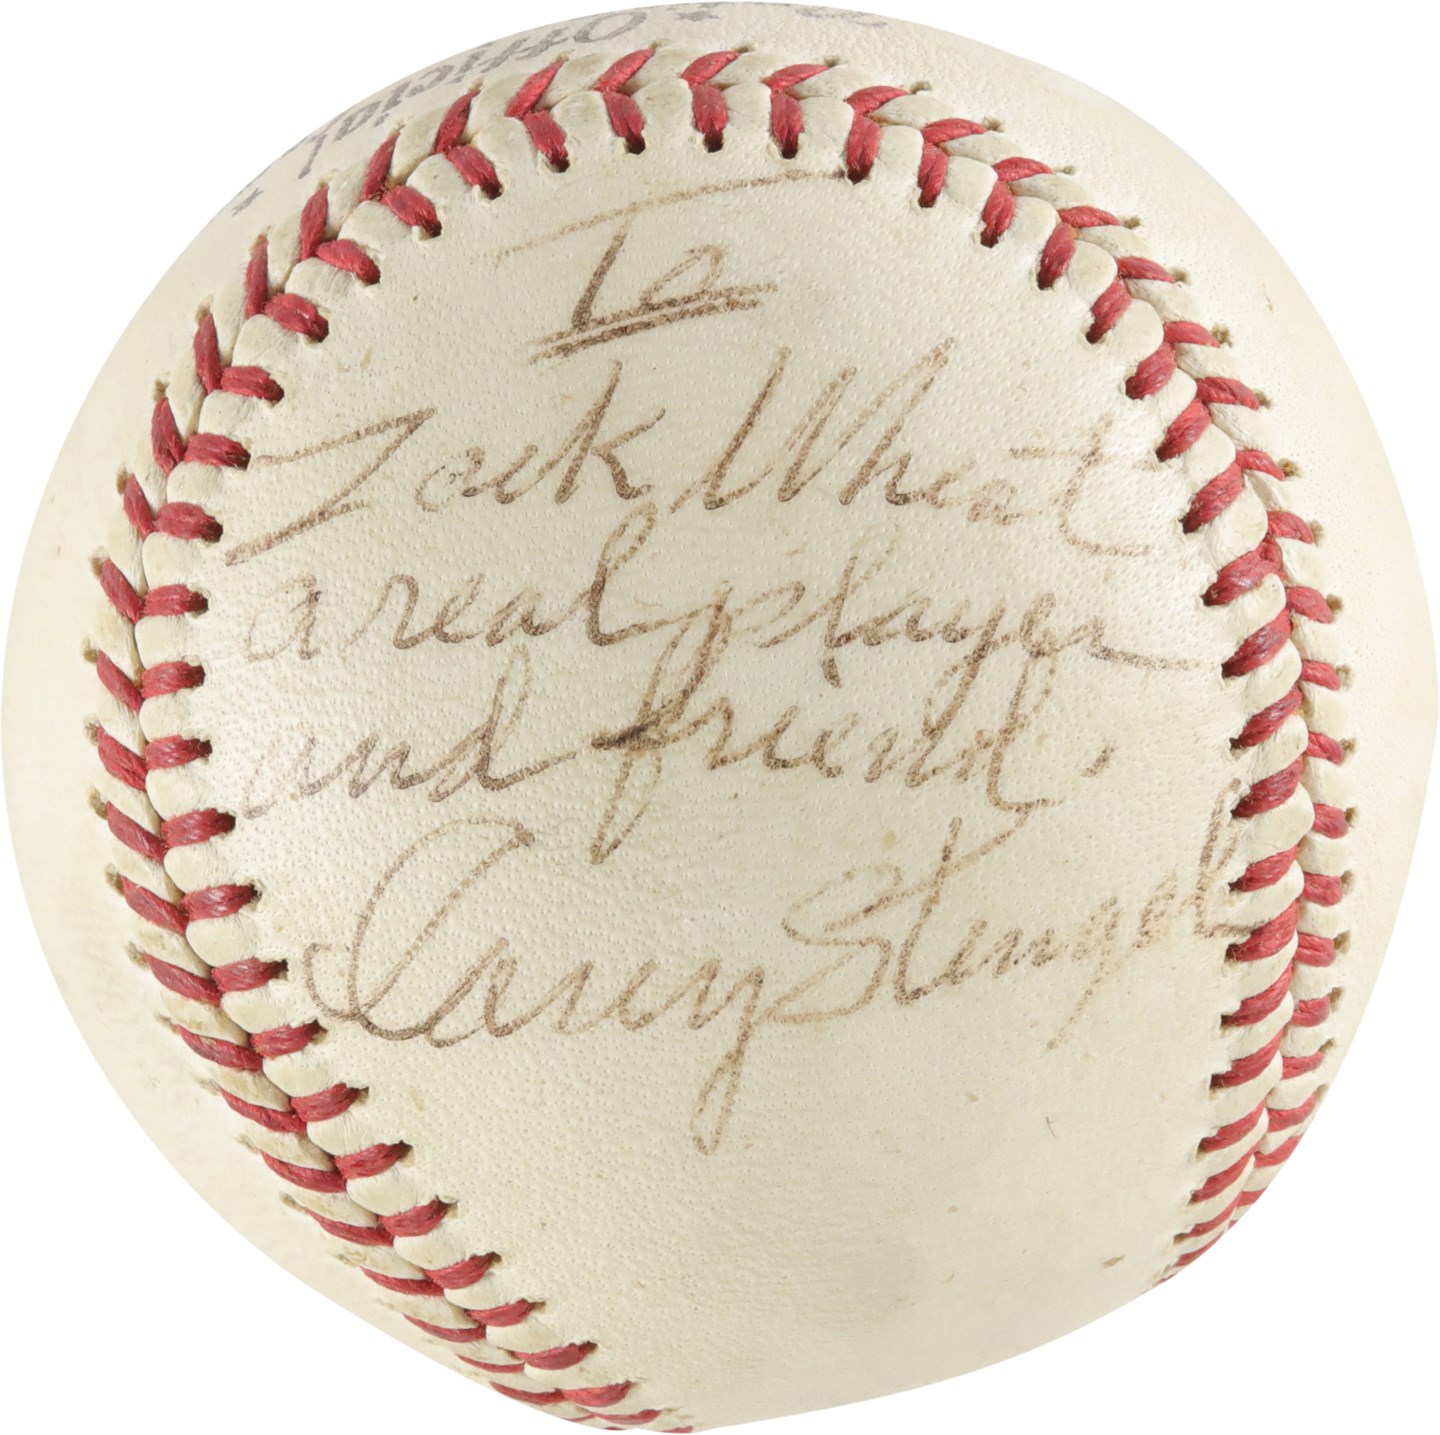 Baseball Autographs - 1960s High Grade Casey Stengel Signed Baseball Personalized to Zack Wheat (PSA)